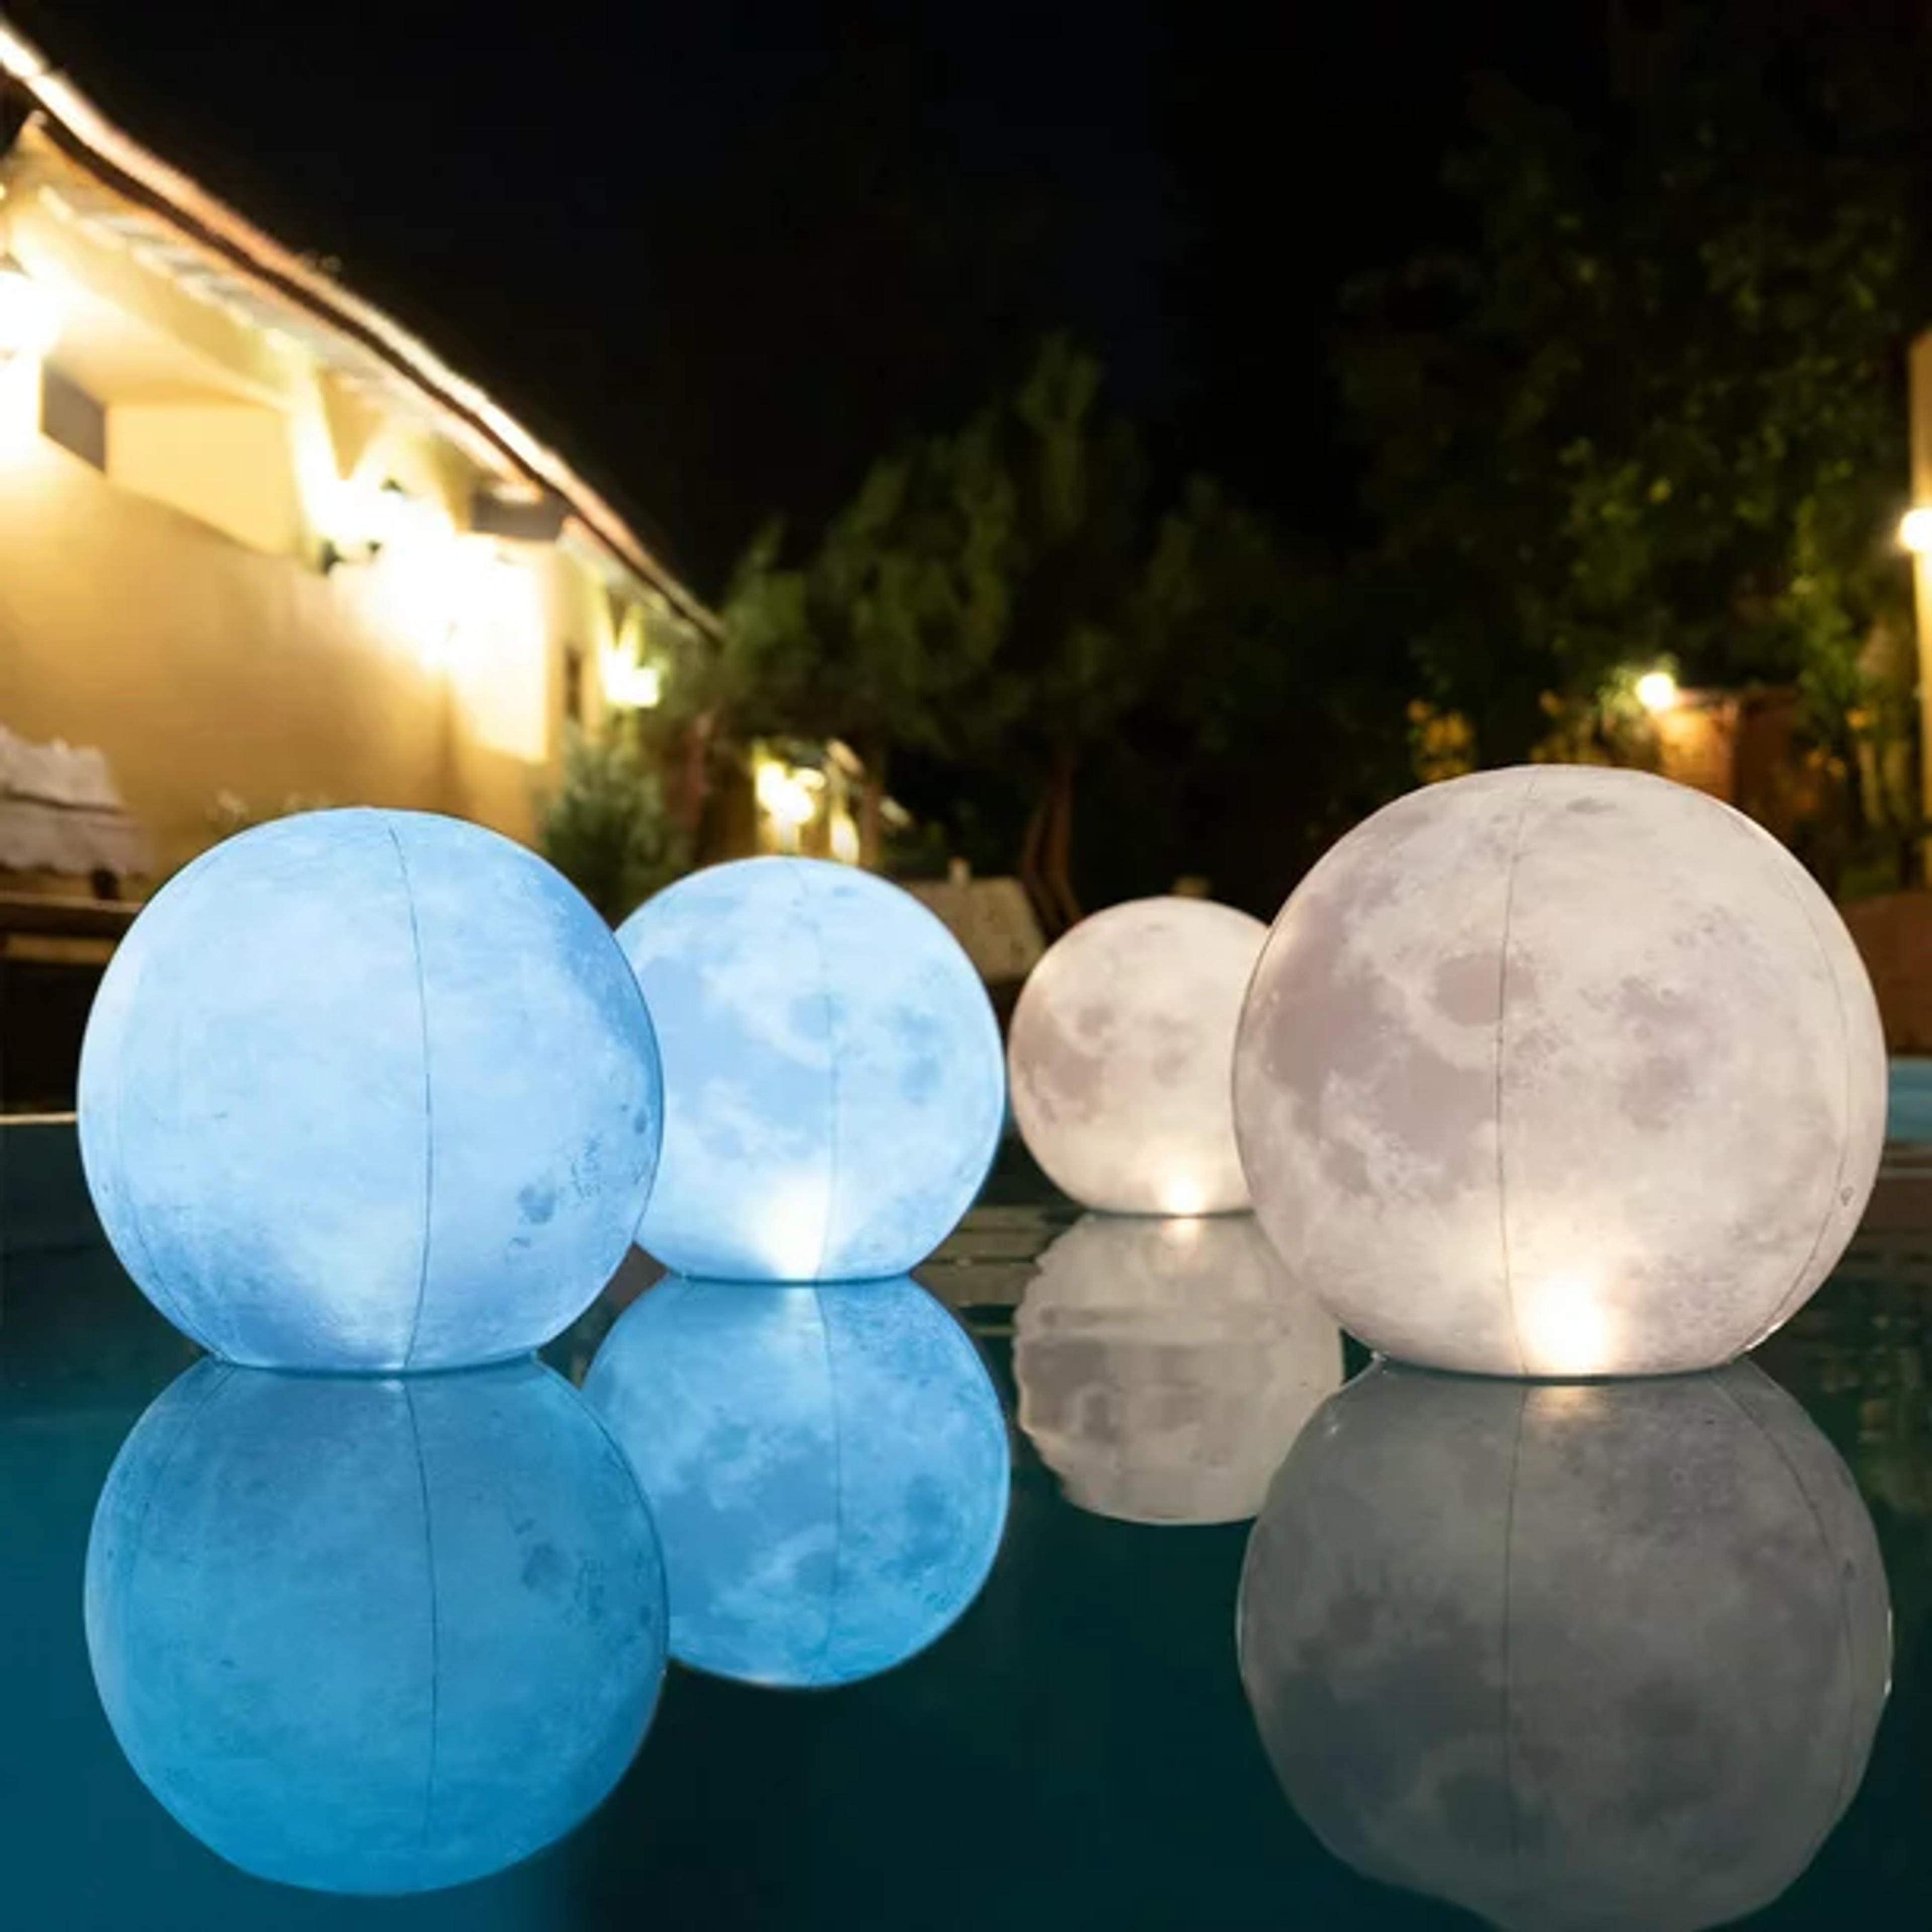 Tially Full Moon Solar Floating Pool Lights - 14" Inflatable Pool Decor (4 Pack) - Walmart.com